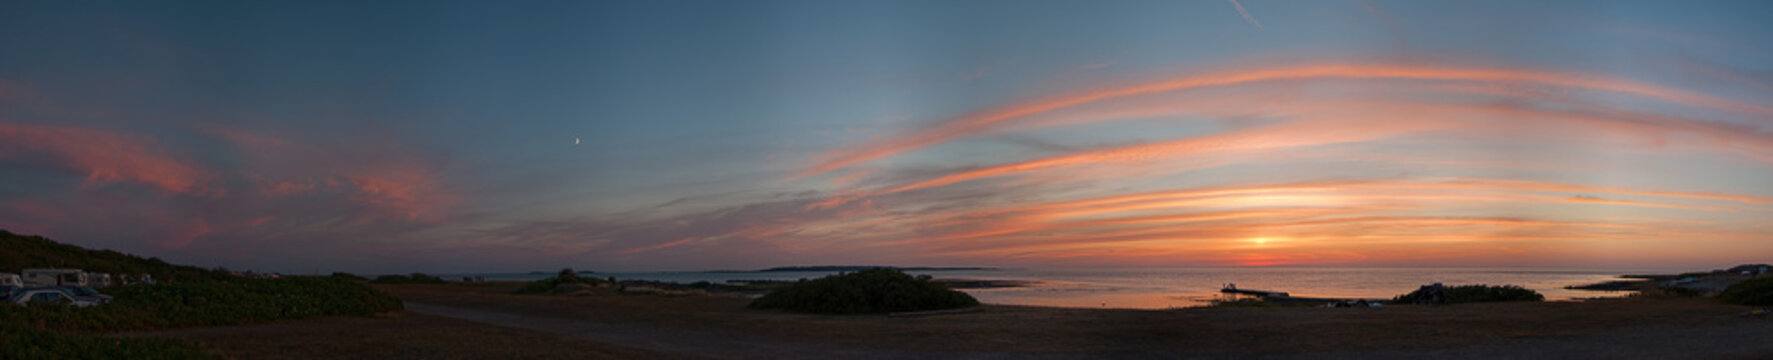 Coastline sunset panorama